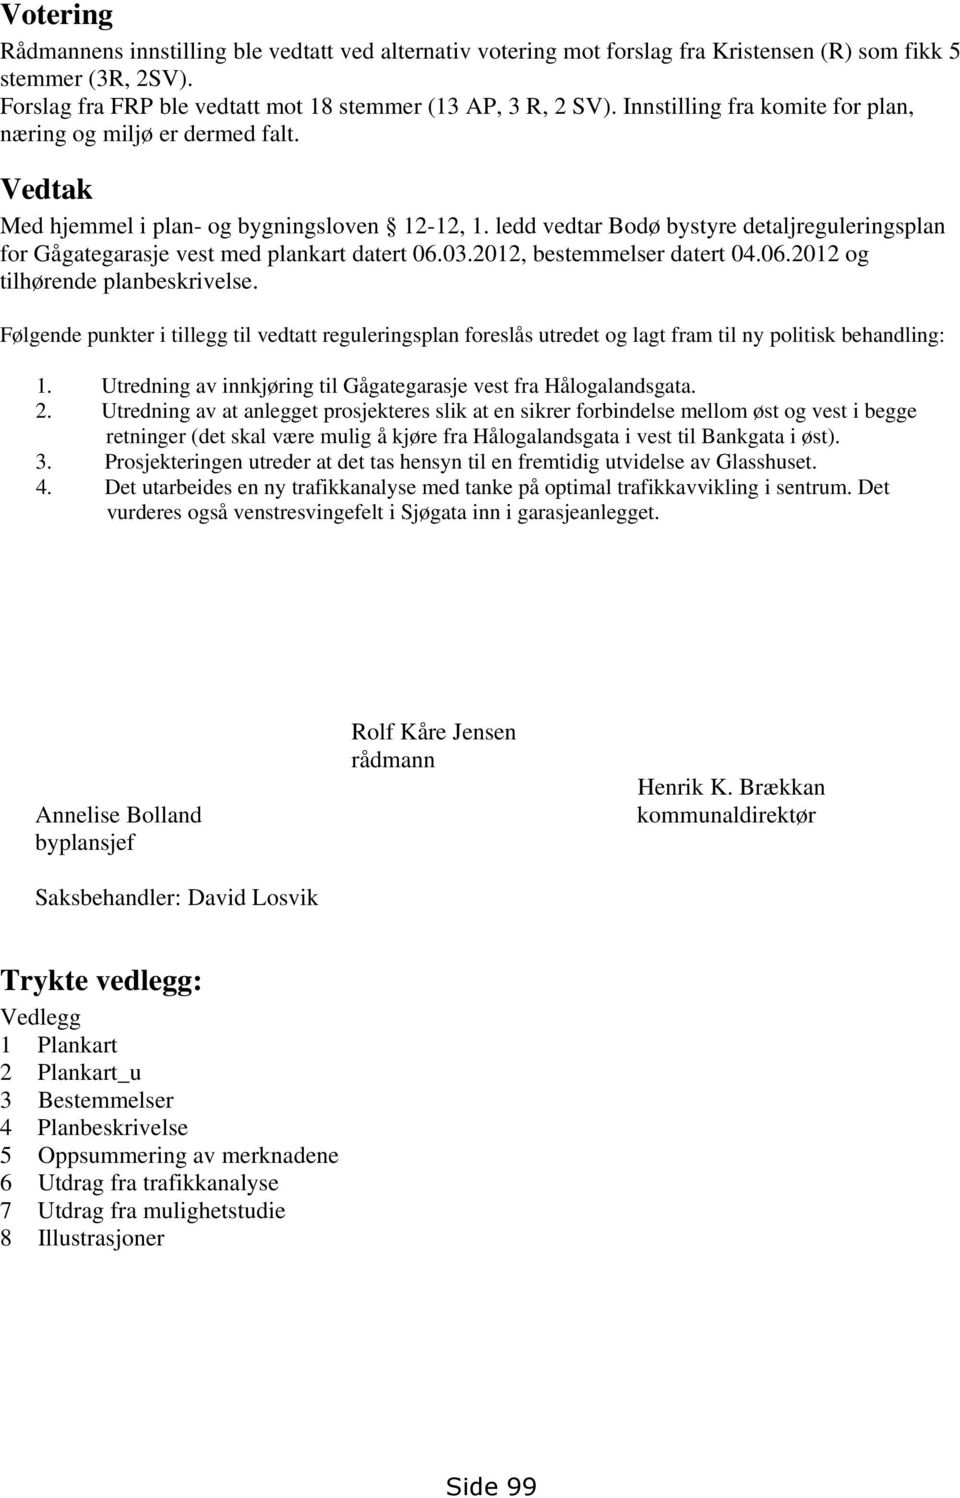 ledd vedtar Bodø bystyre detaljreguleringsplan for Gågategarasje vest med plankart datert 06.03.2012, bestemmelser datert 04.06.2012 og tilhørende planbeskrivelse.